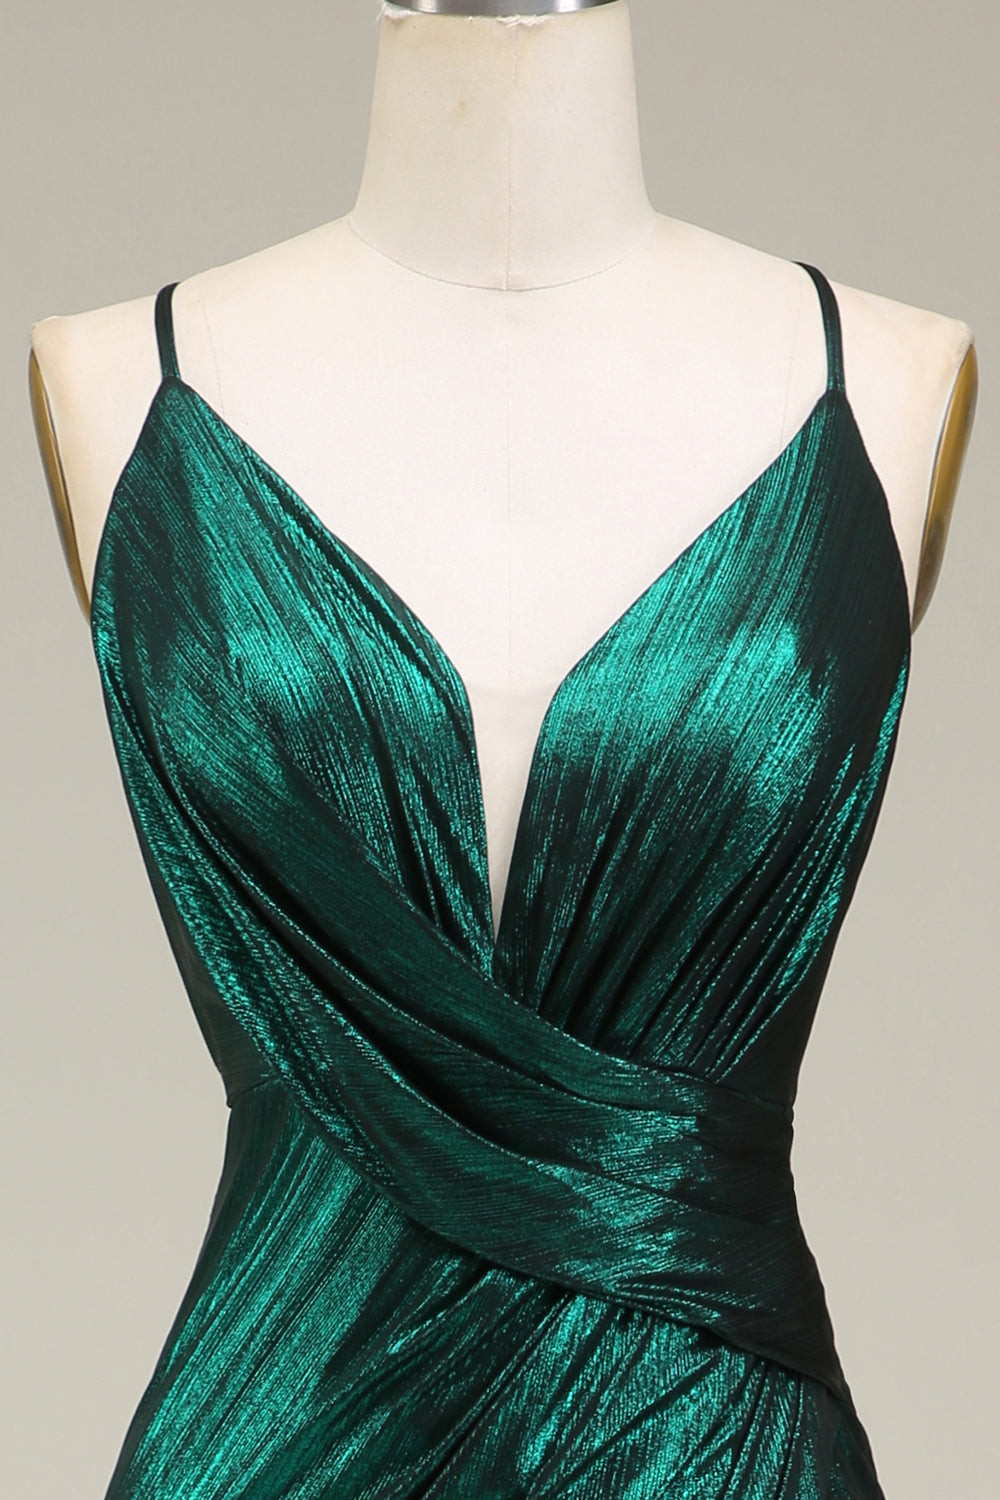 Dark Green Mermaid Spaghetti Straps Long Prom Dress with Open Back